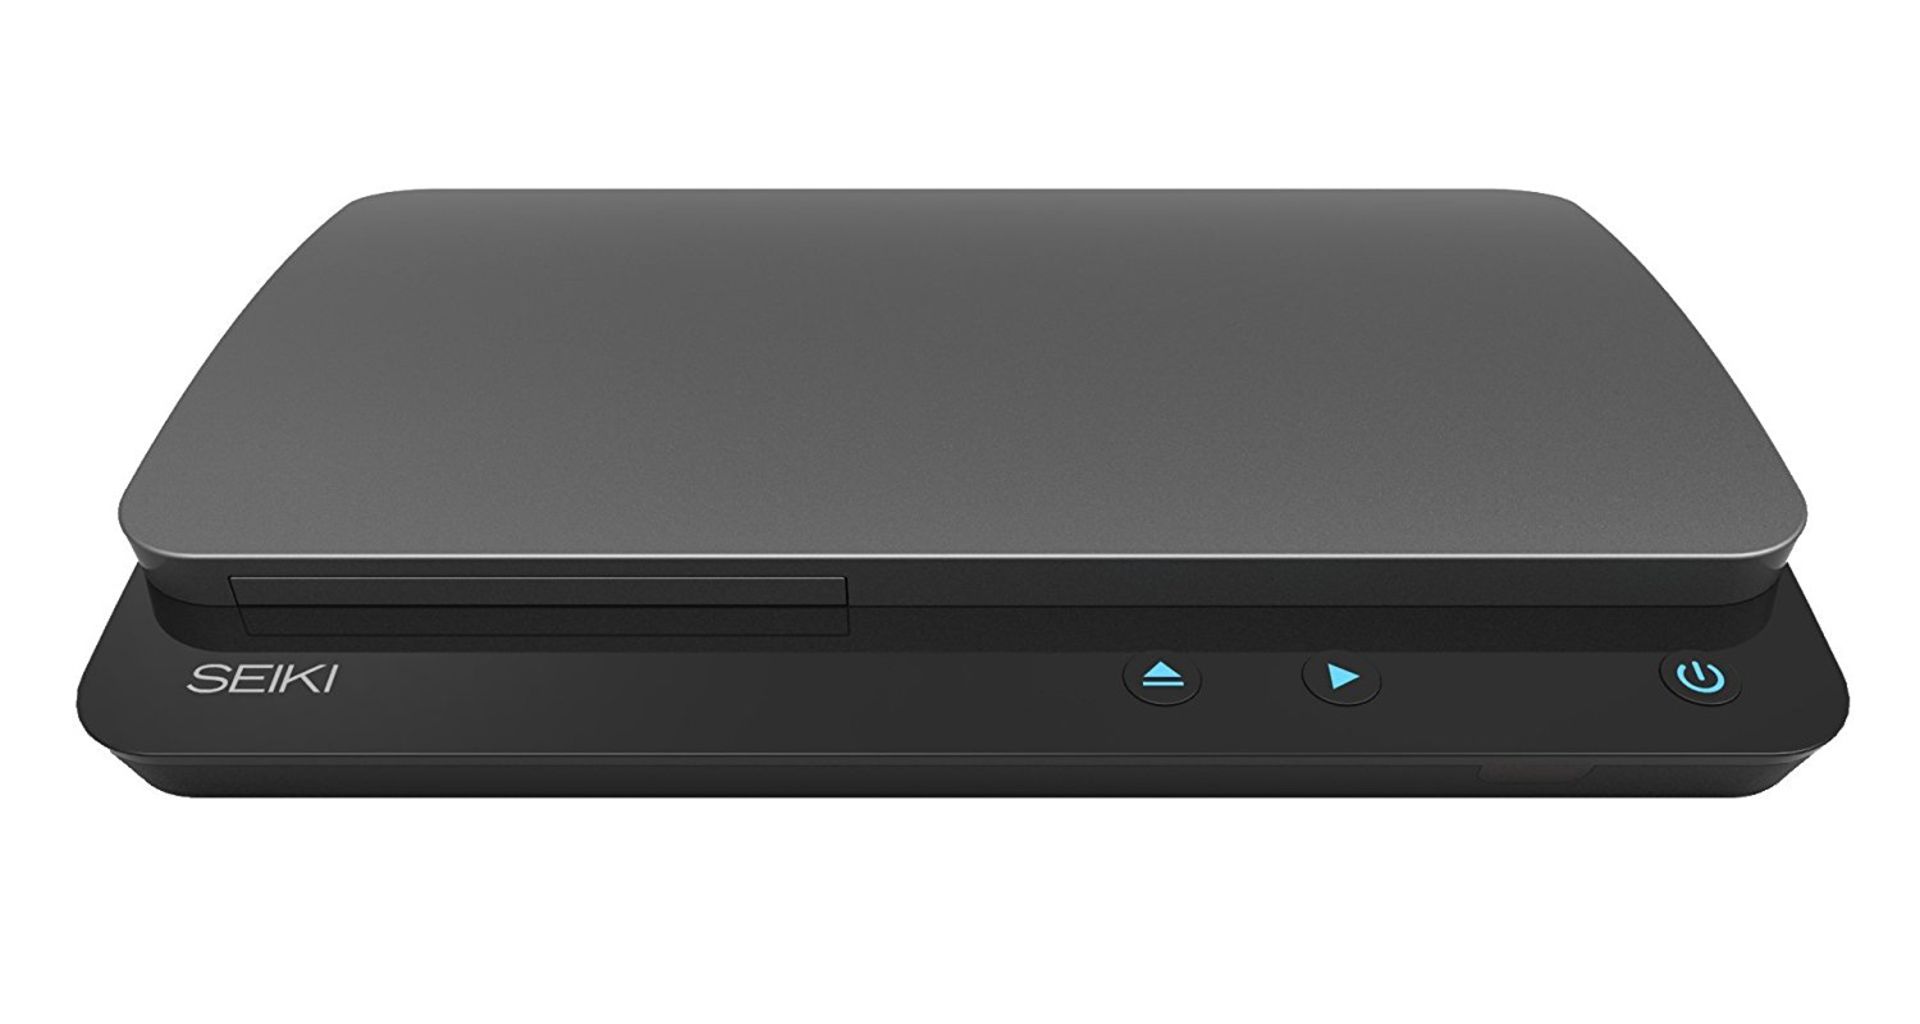 V Brand New Seiki 4K Upscaling Blu-Ray Player - Technicolor 4K Image Certified - Dolby Digital